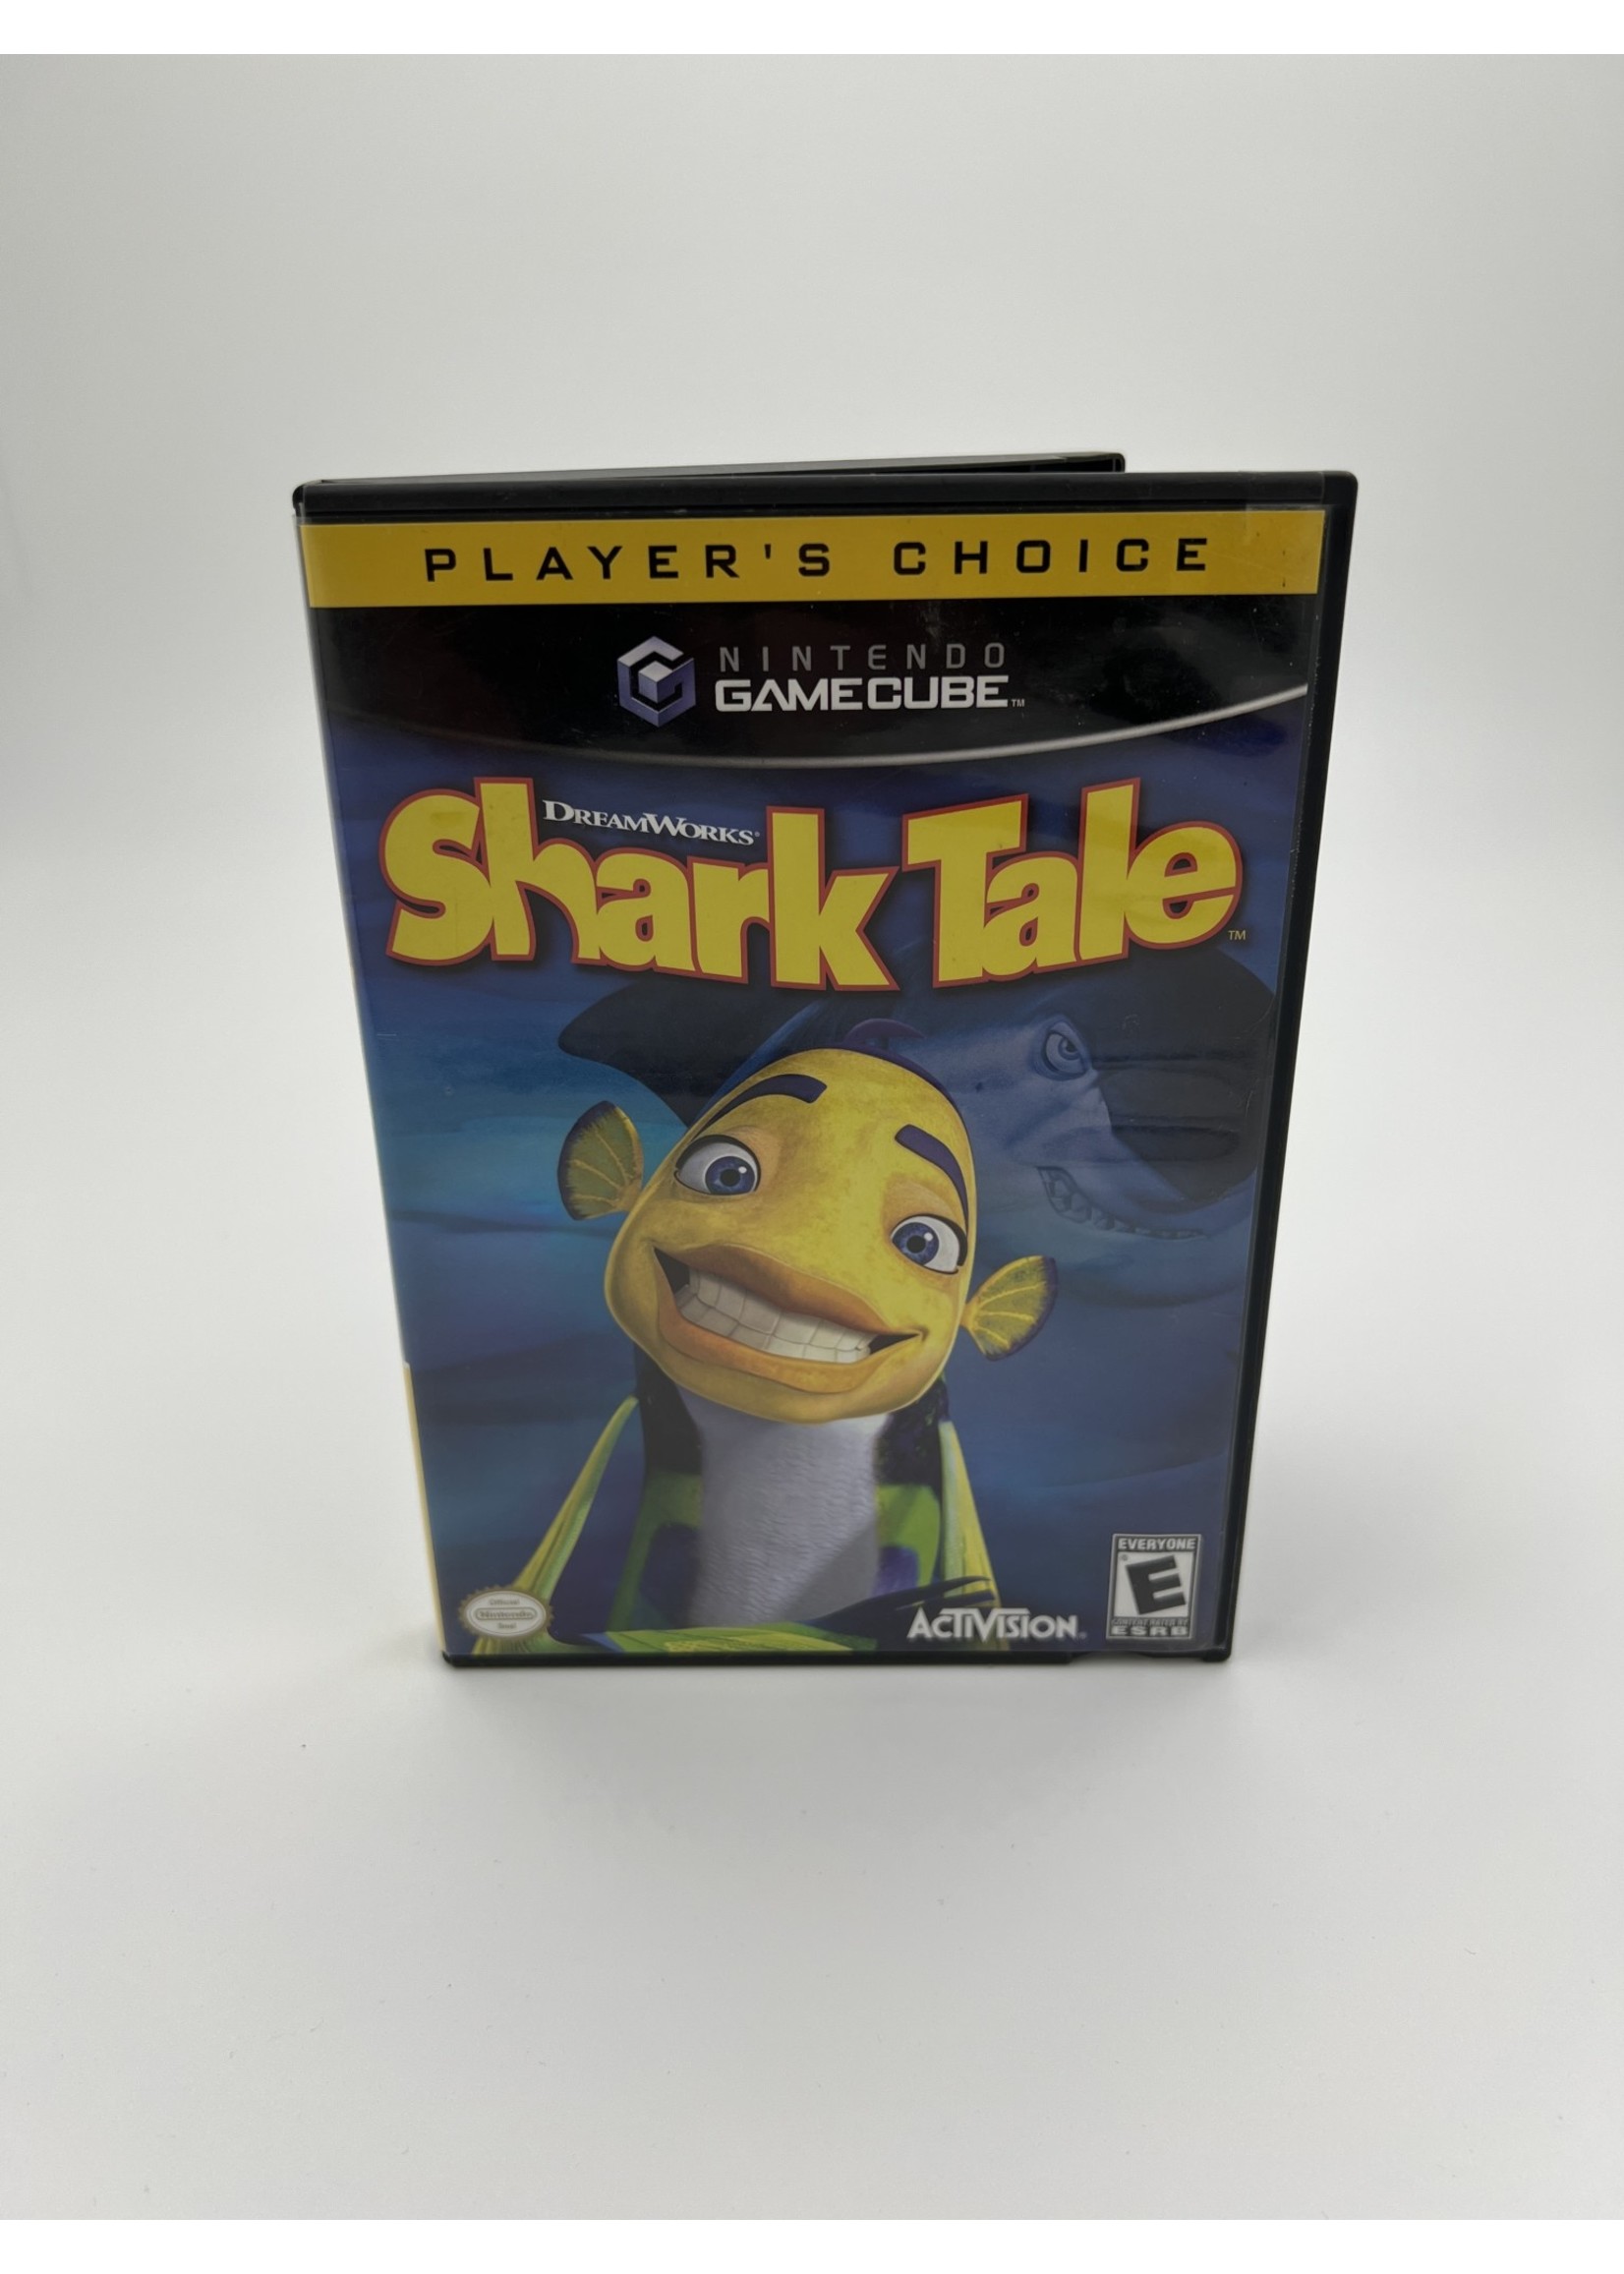 Nintendo Dreamworks Shark Tale Gamecube